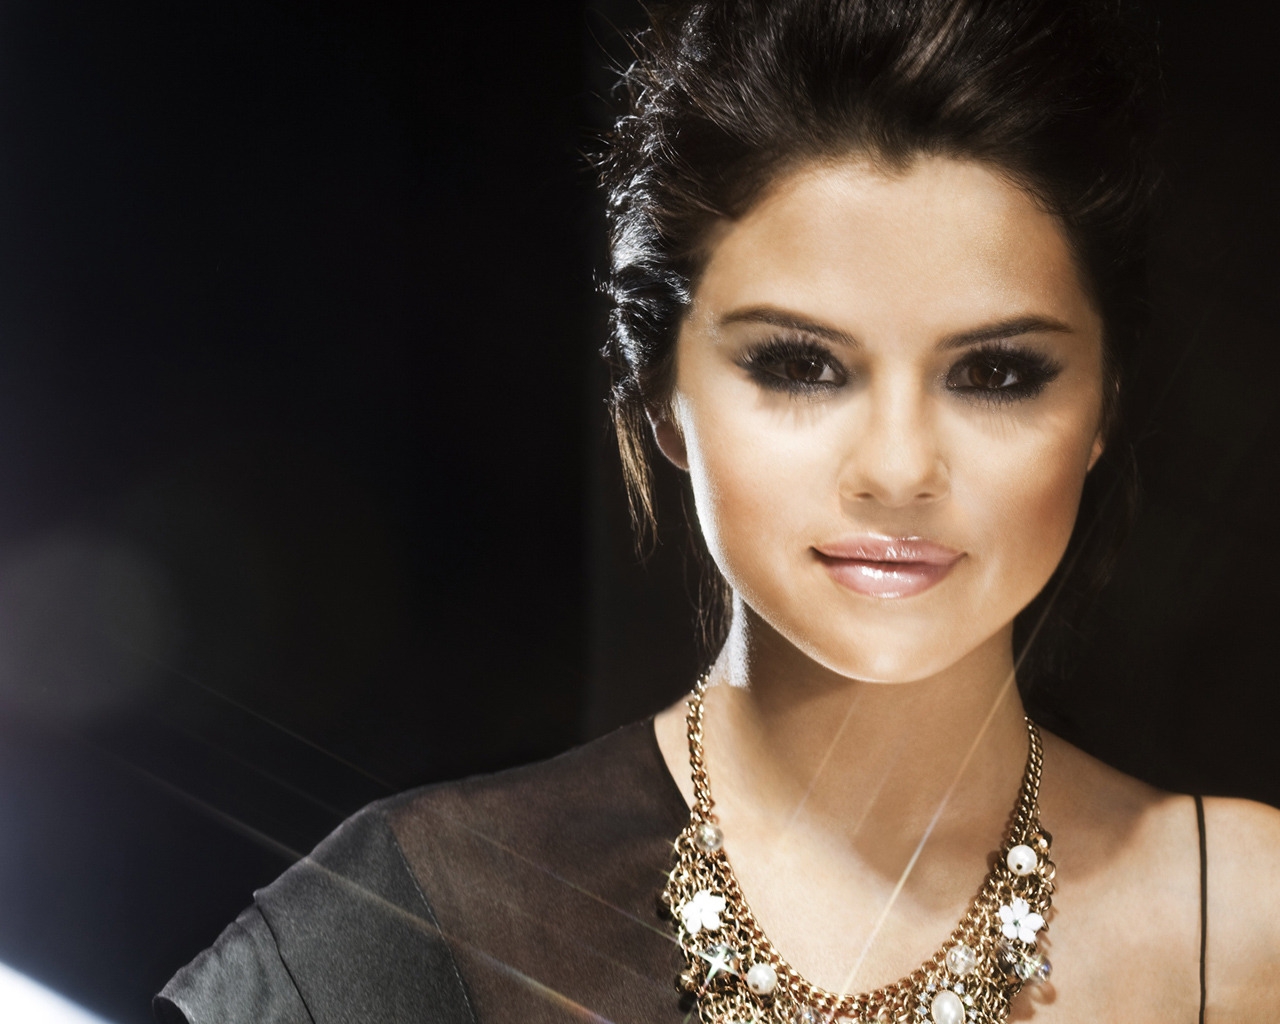 Beautiful Selena Gomez for 1280 x 1024 resolution